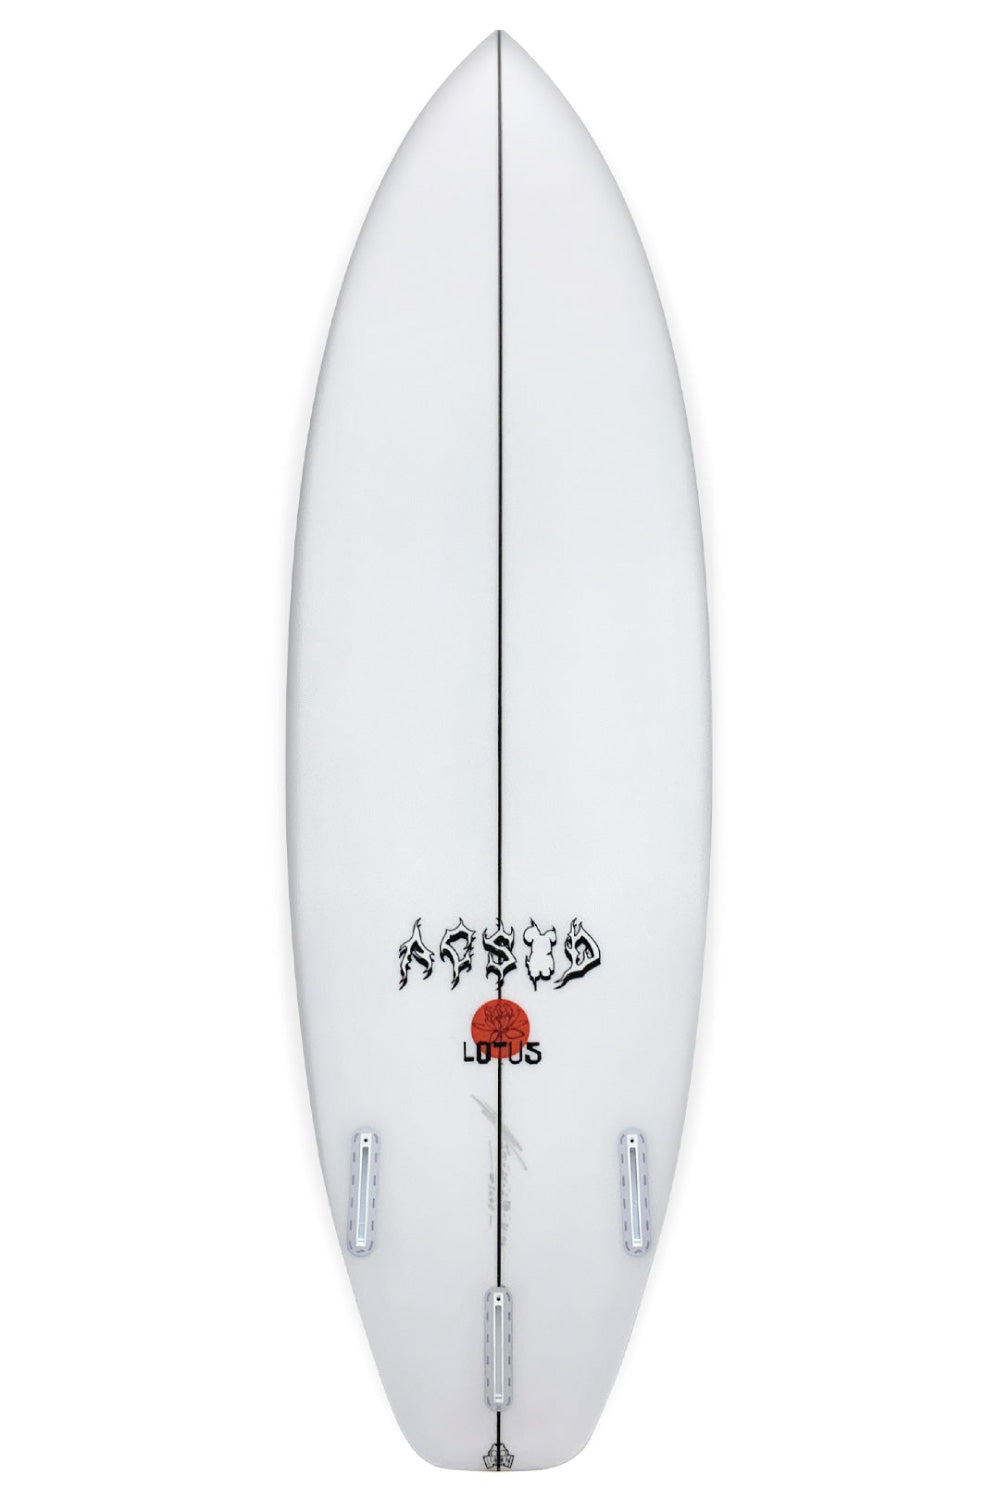 ACSOD Lotus Surfboard